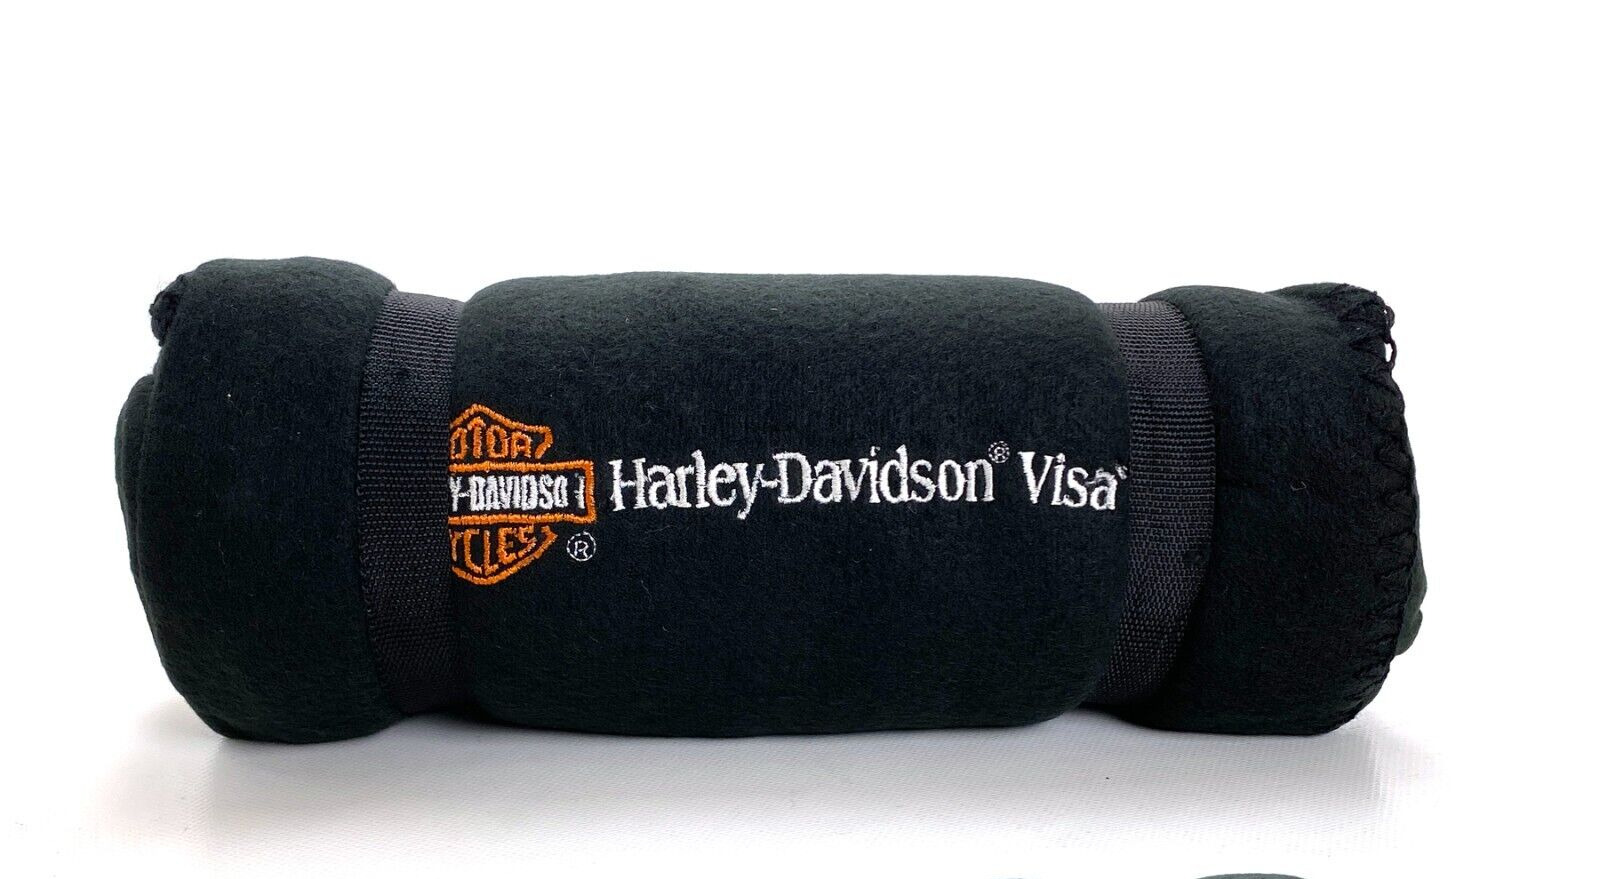 Harley Davidson Fleece Blanket 4x5 Visa Promotional NEW